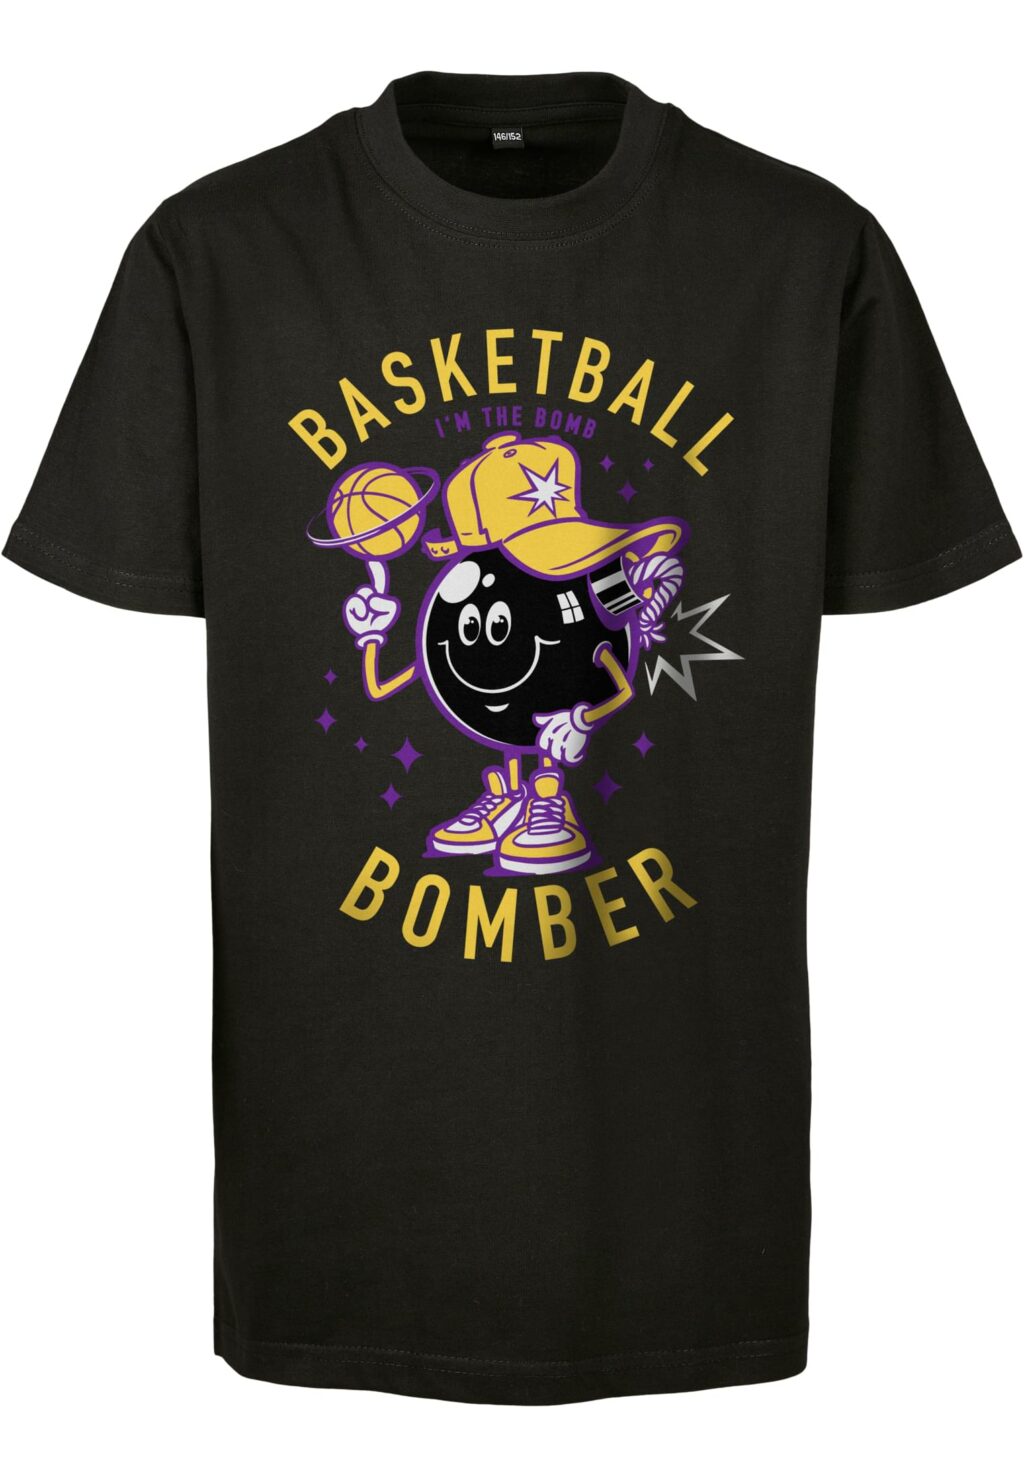 Kids Basketball Bomber Tee black MTK230